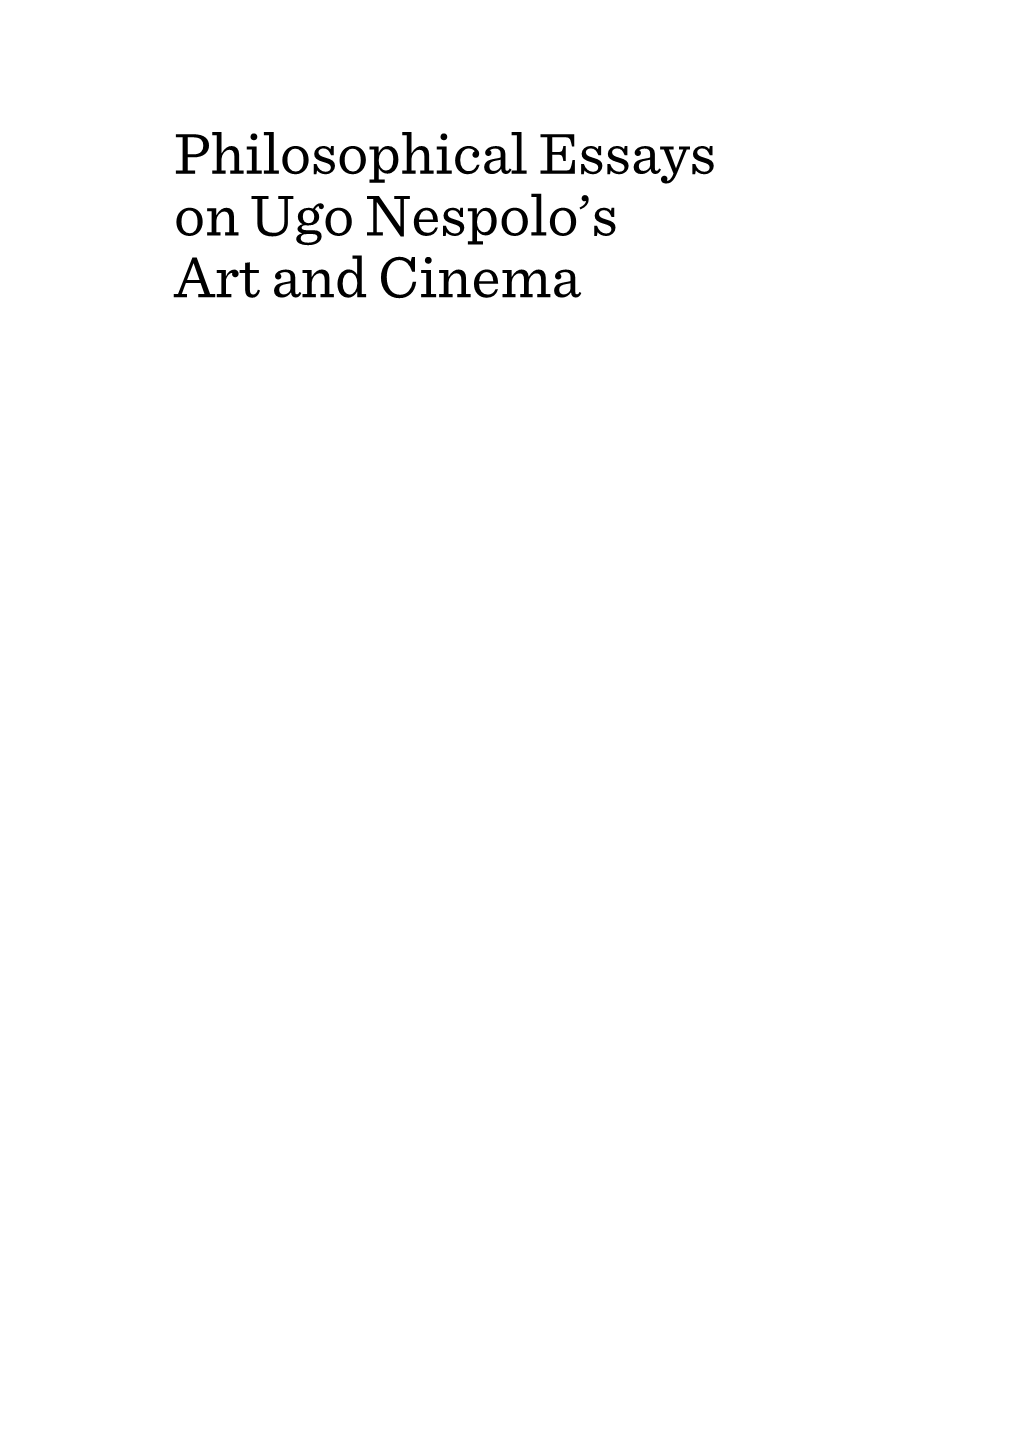 Philosophical Essays on Ugo Nespolo's Art and Cinema